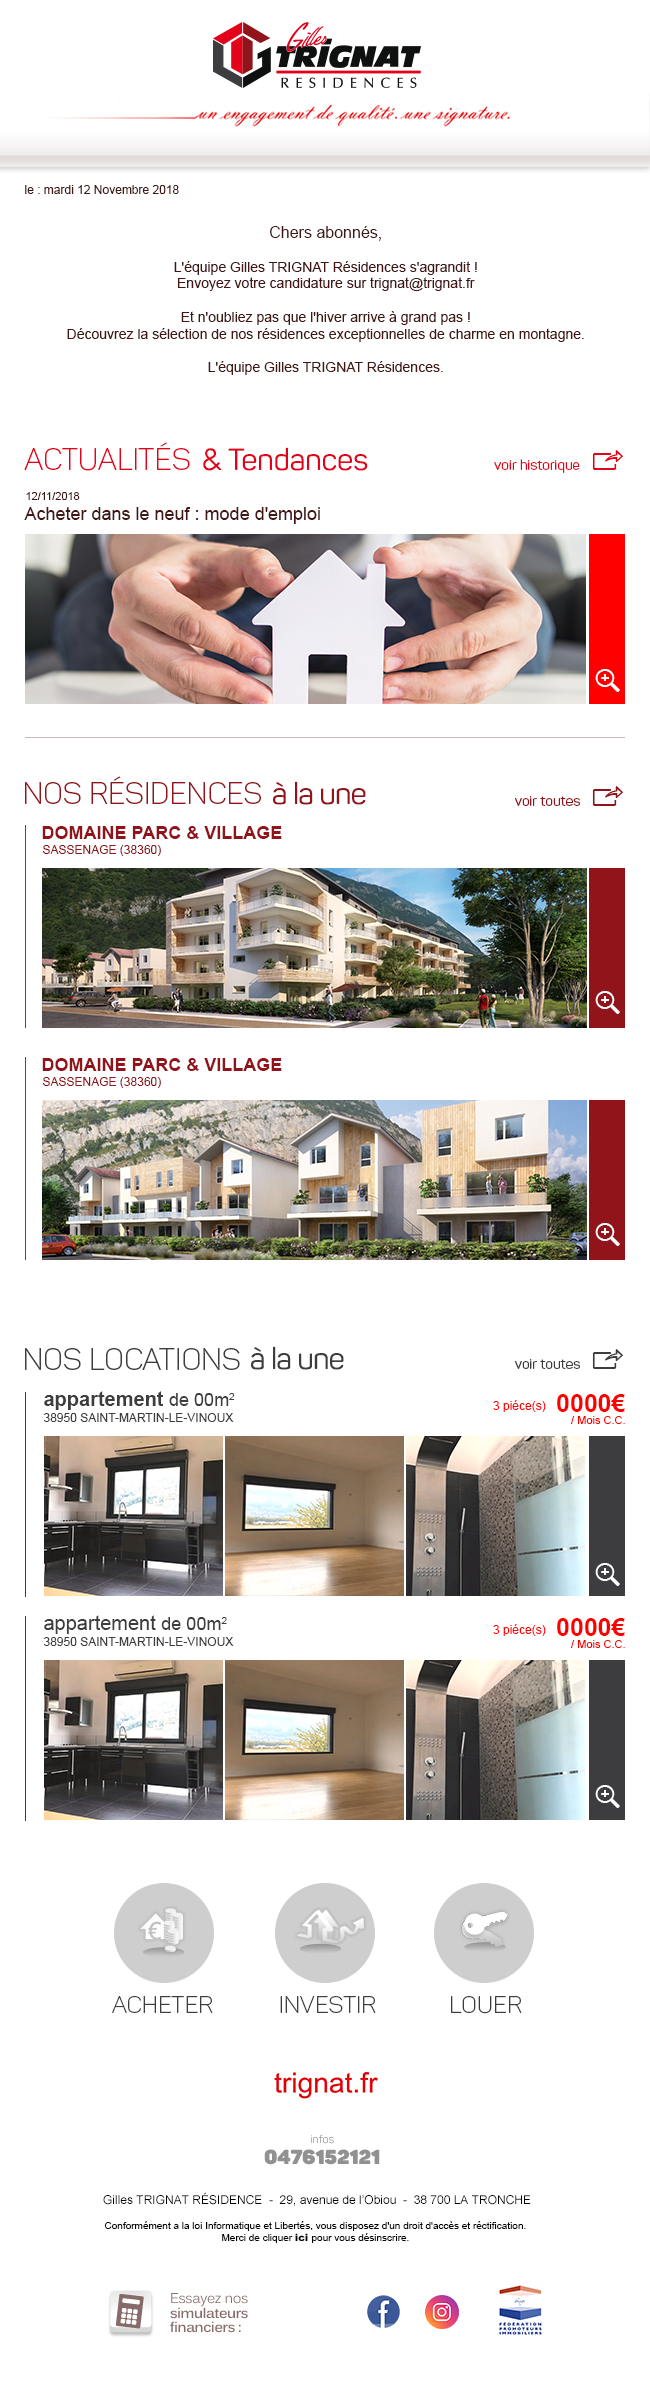 Alpes design immobilier promoteur Website